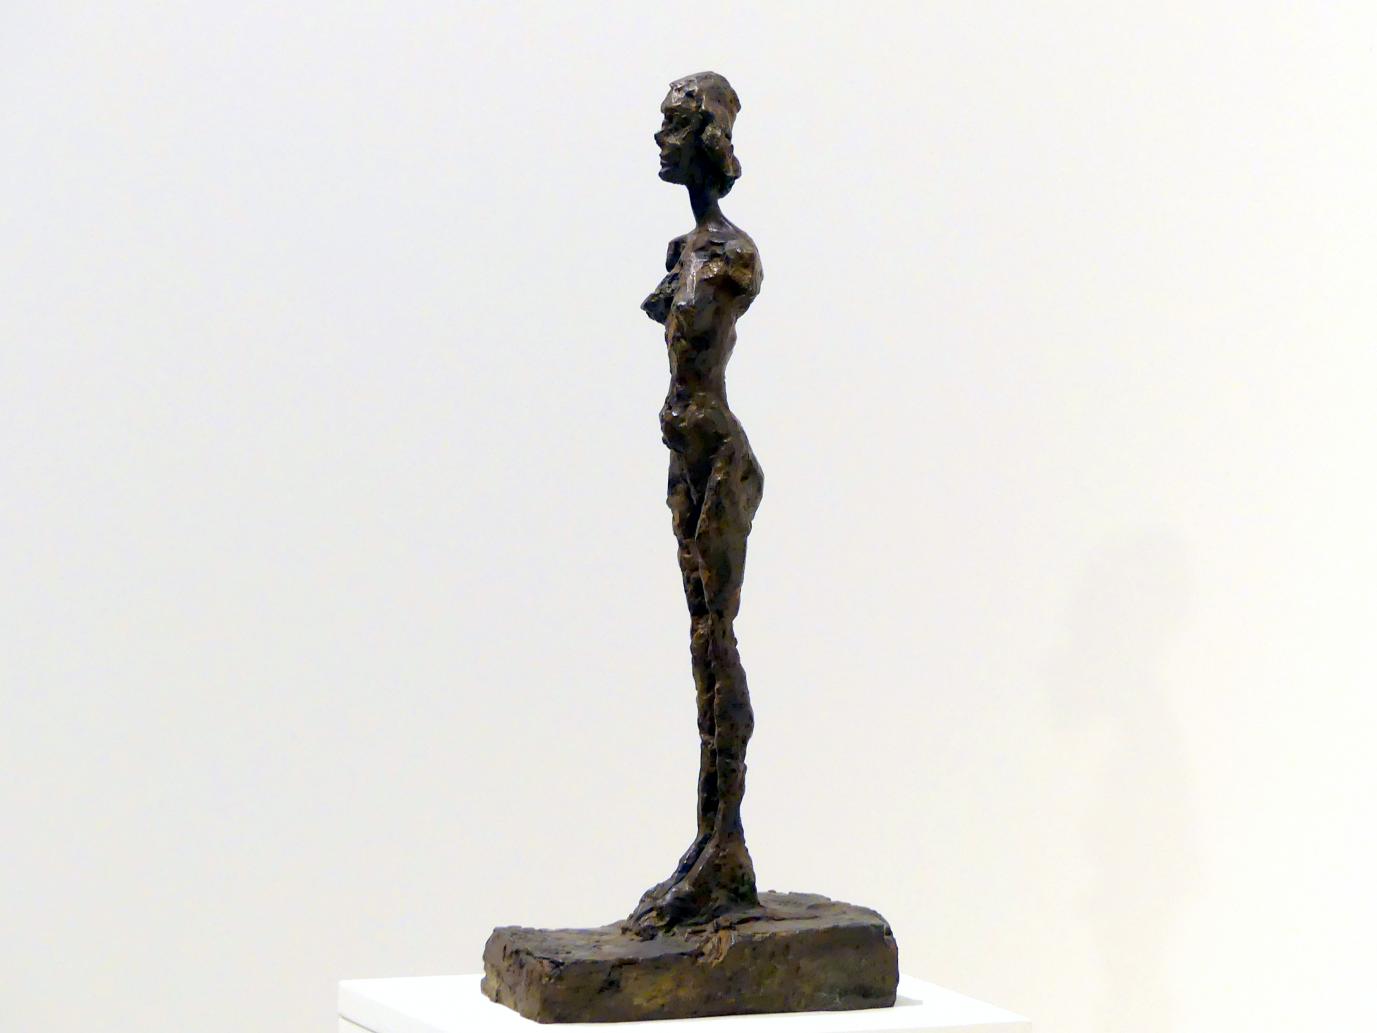 Alberto Giacometti (1914–1965), Annette stehend, Prag, Nationalgalerie im Messepalast, Ausstellung "Alberto Giacometti" vom 18.07.-01.12.2019, Stehende Figuren, um 1954, Bild 3/4